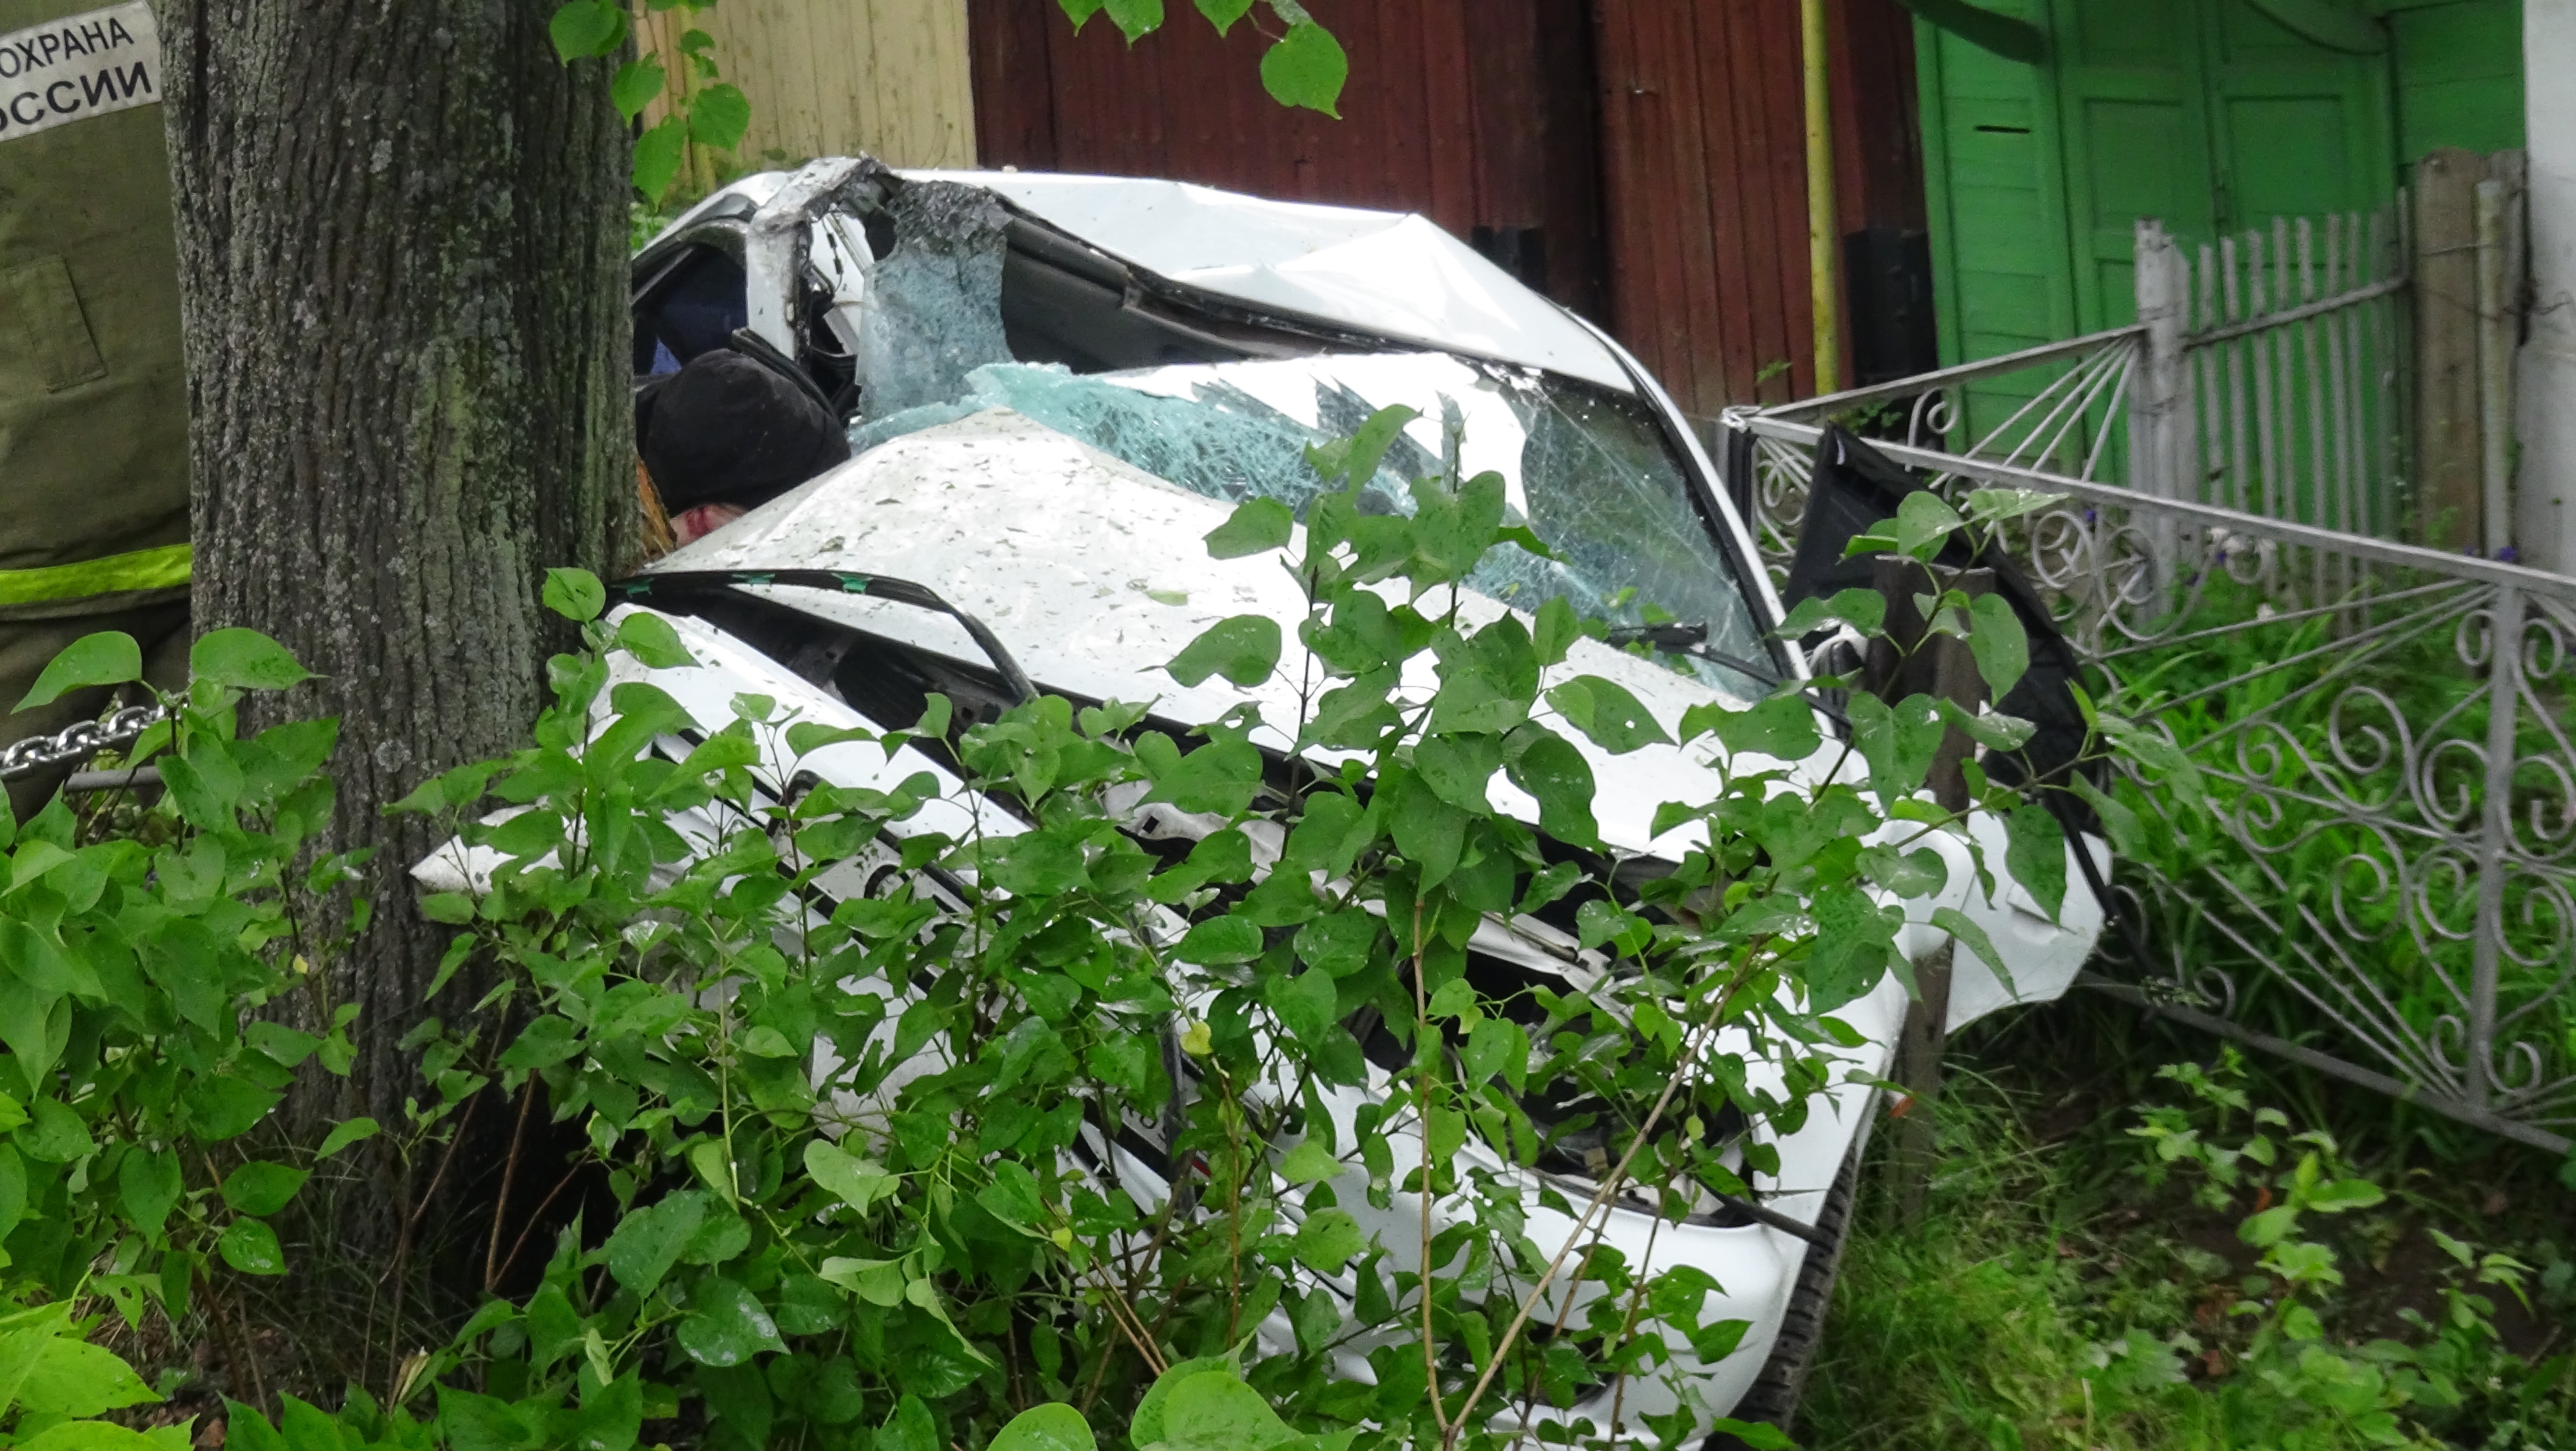 Двадцатилетний водитель погиб в ДТП в Кушве